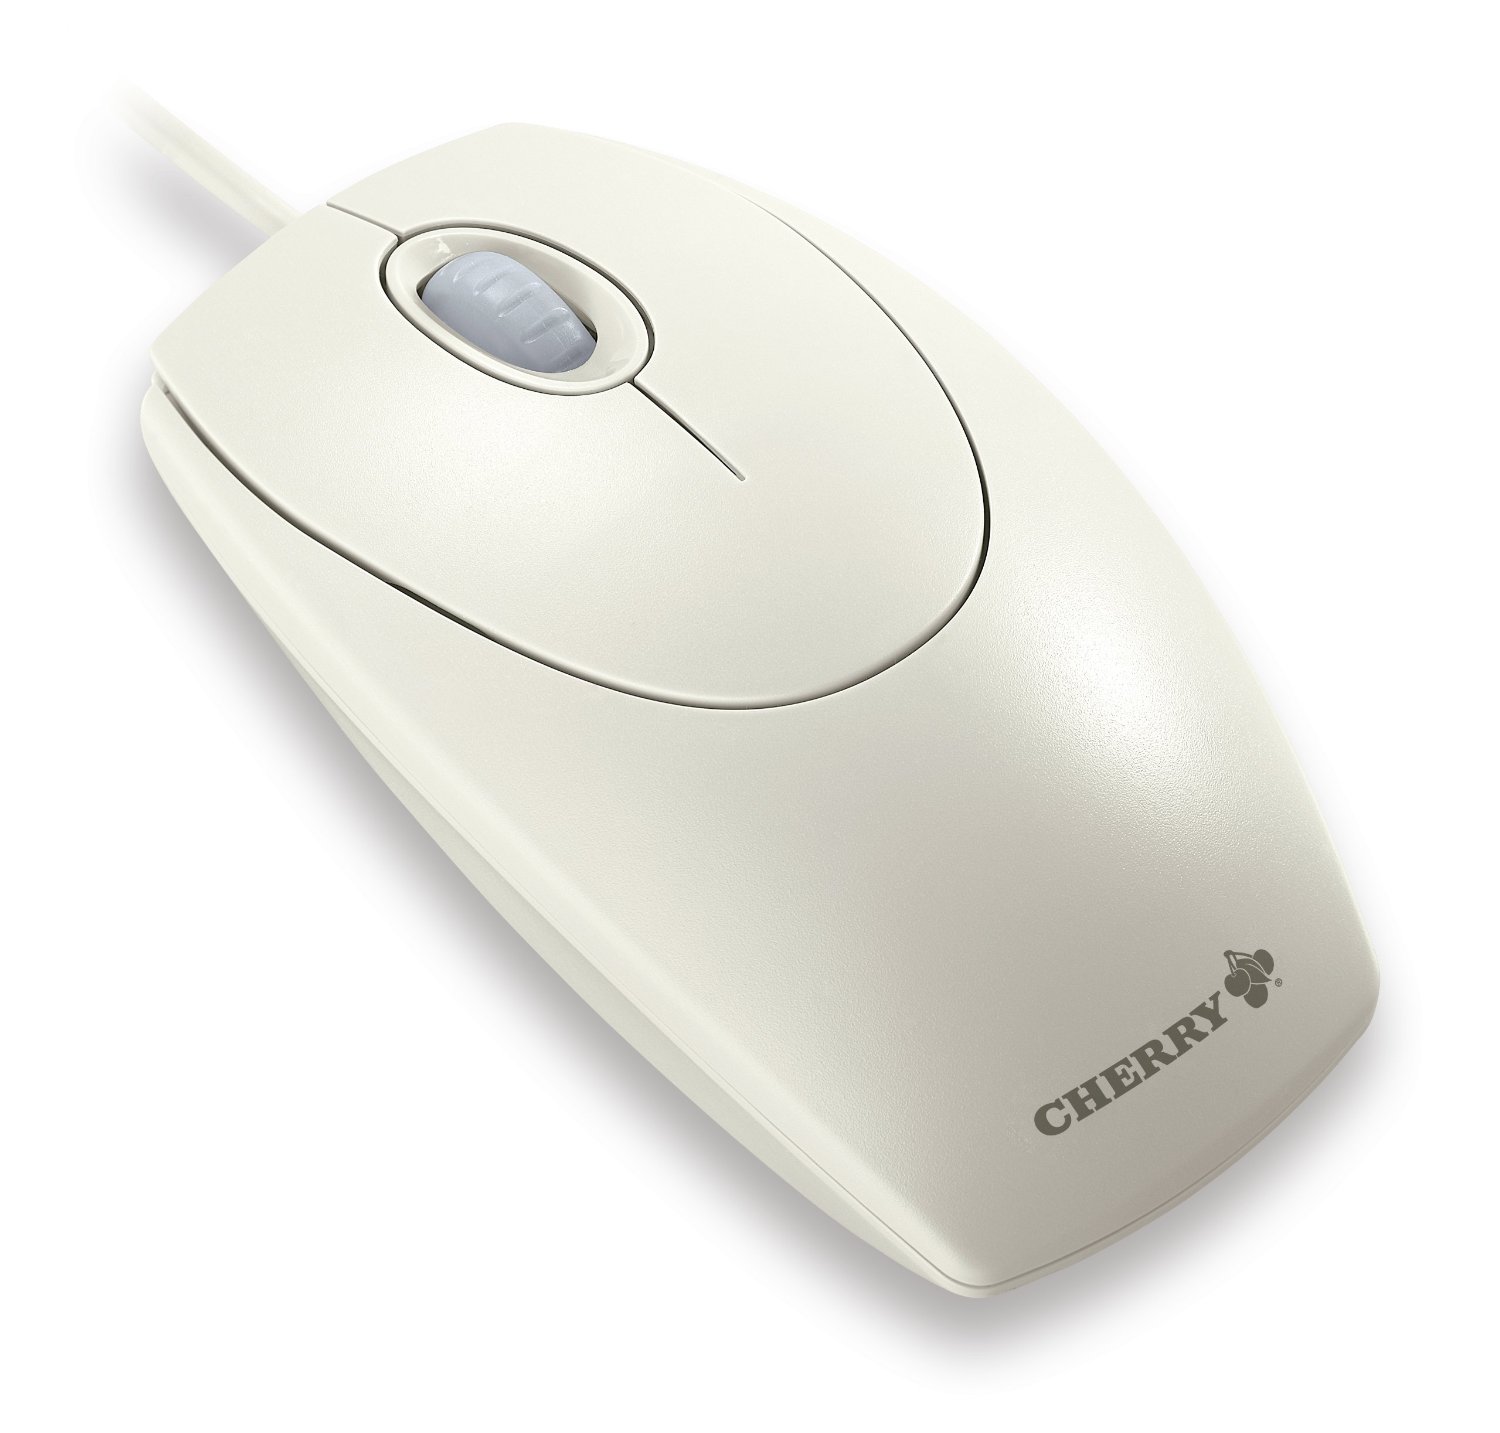 Mouse CHERRY M-5400 Wheel Mouse Optical hellgrau USB/PS2 Datora pele